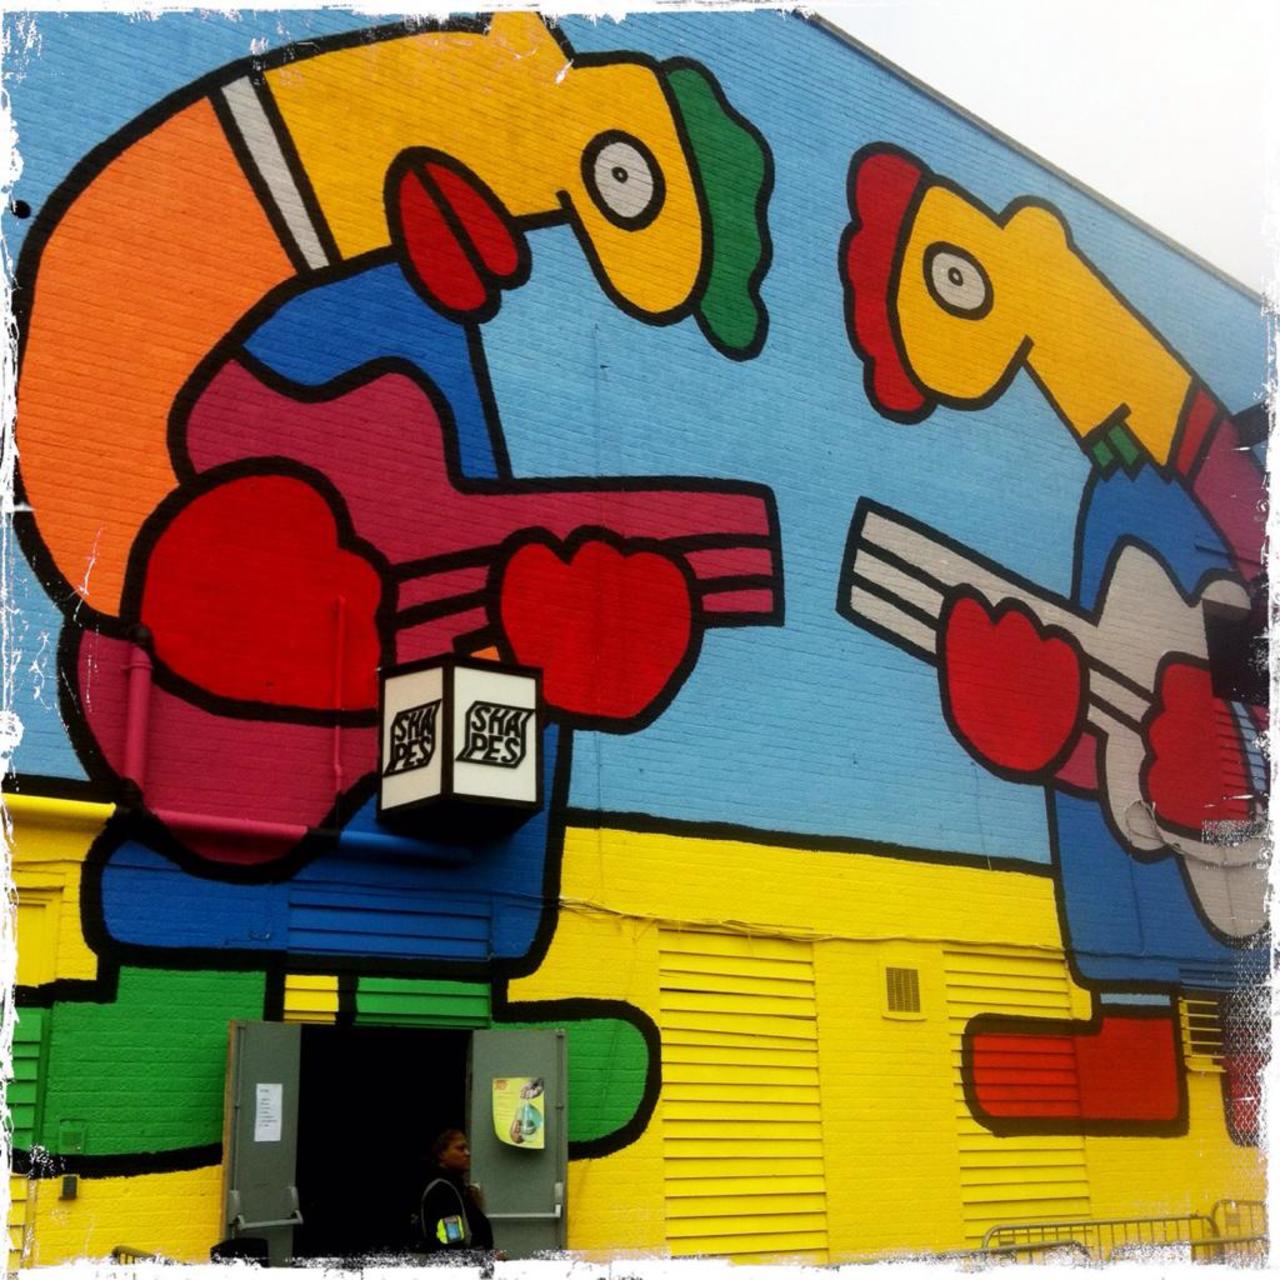 RT @gianni_nigia: “@BrickLaneArt: Fantastic @NoirThierry mural in Hackney Wick #streetart #art #graffiti http://t.co/KI7akhQa1d”